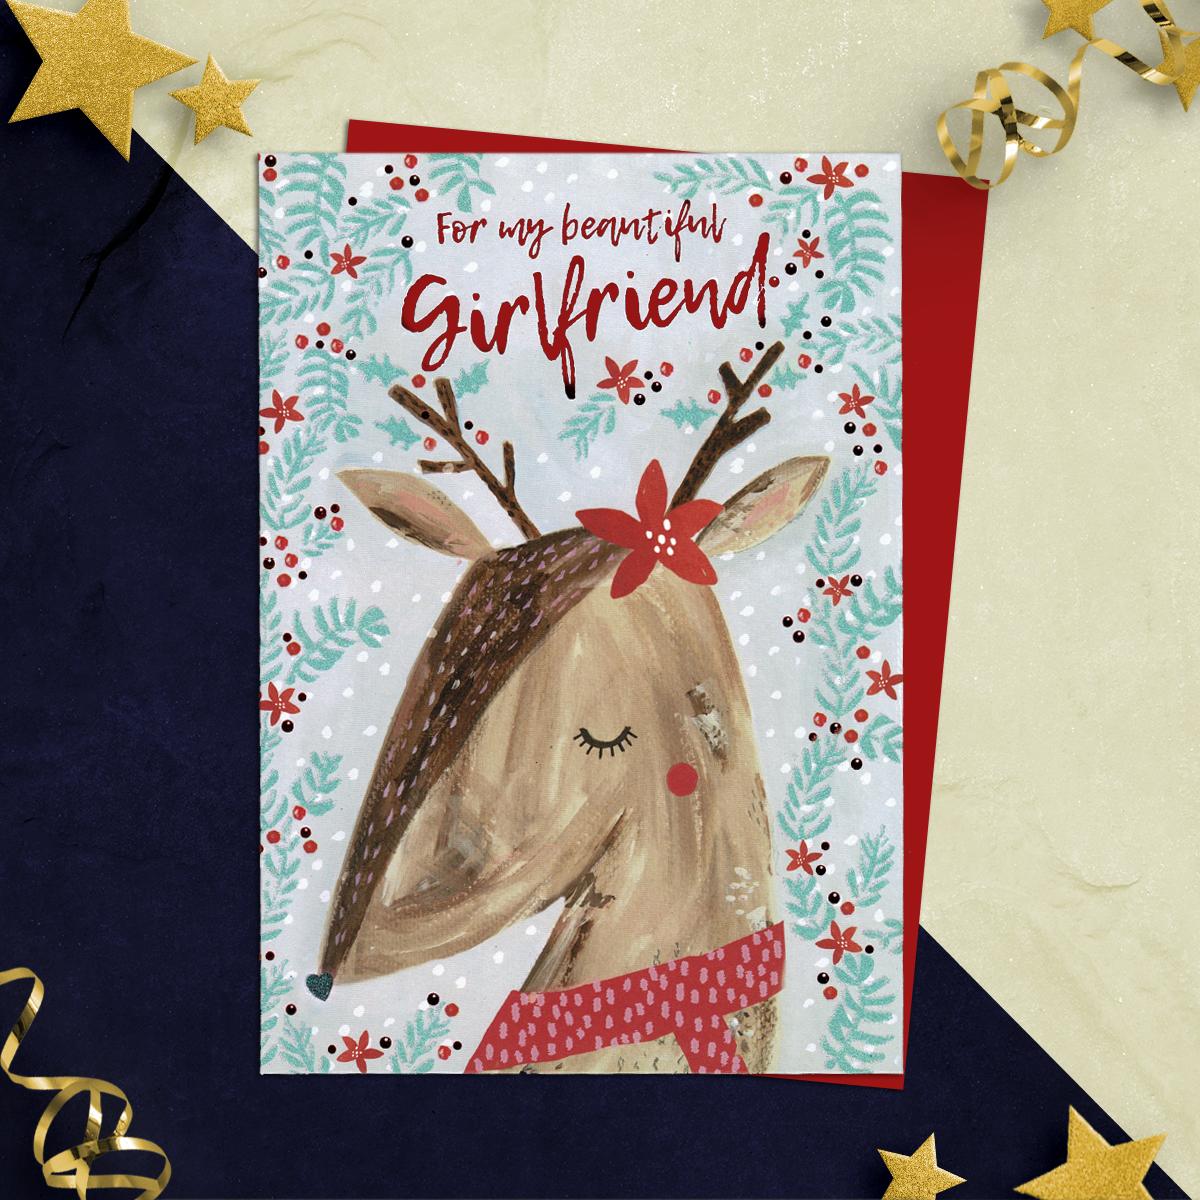 Girlfriend Christmas Card Alongside Its Red Envelope